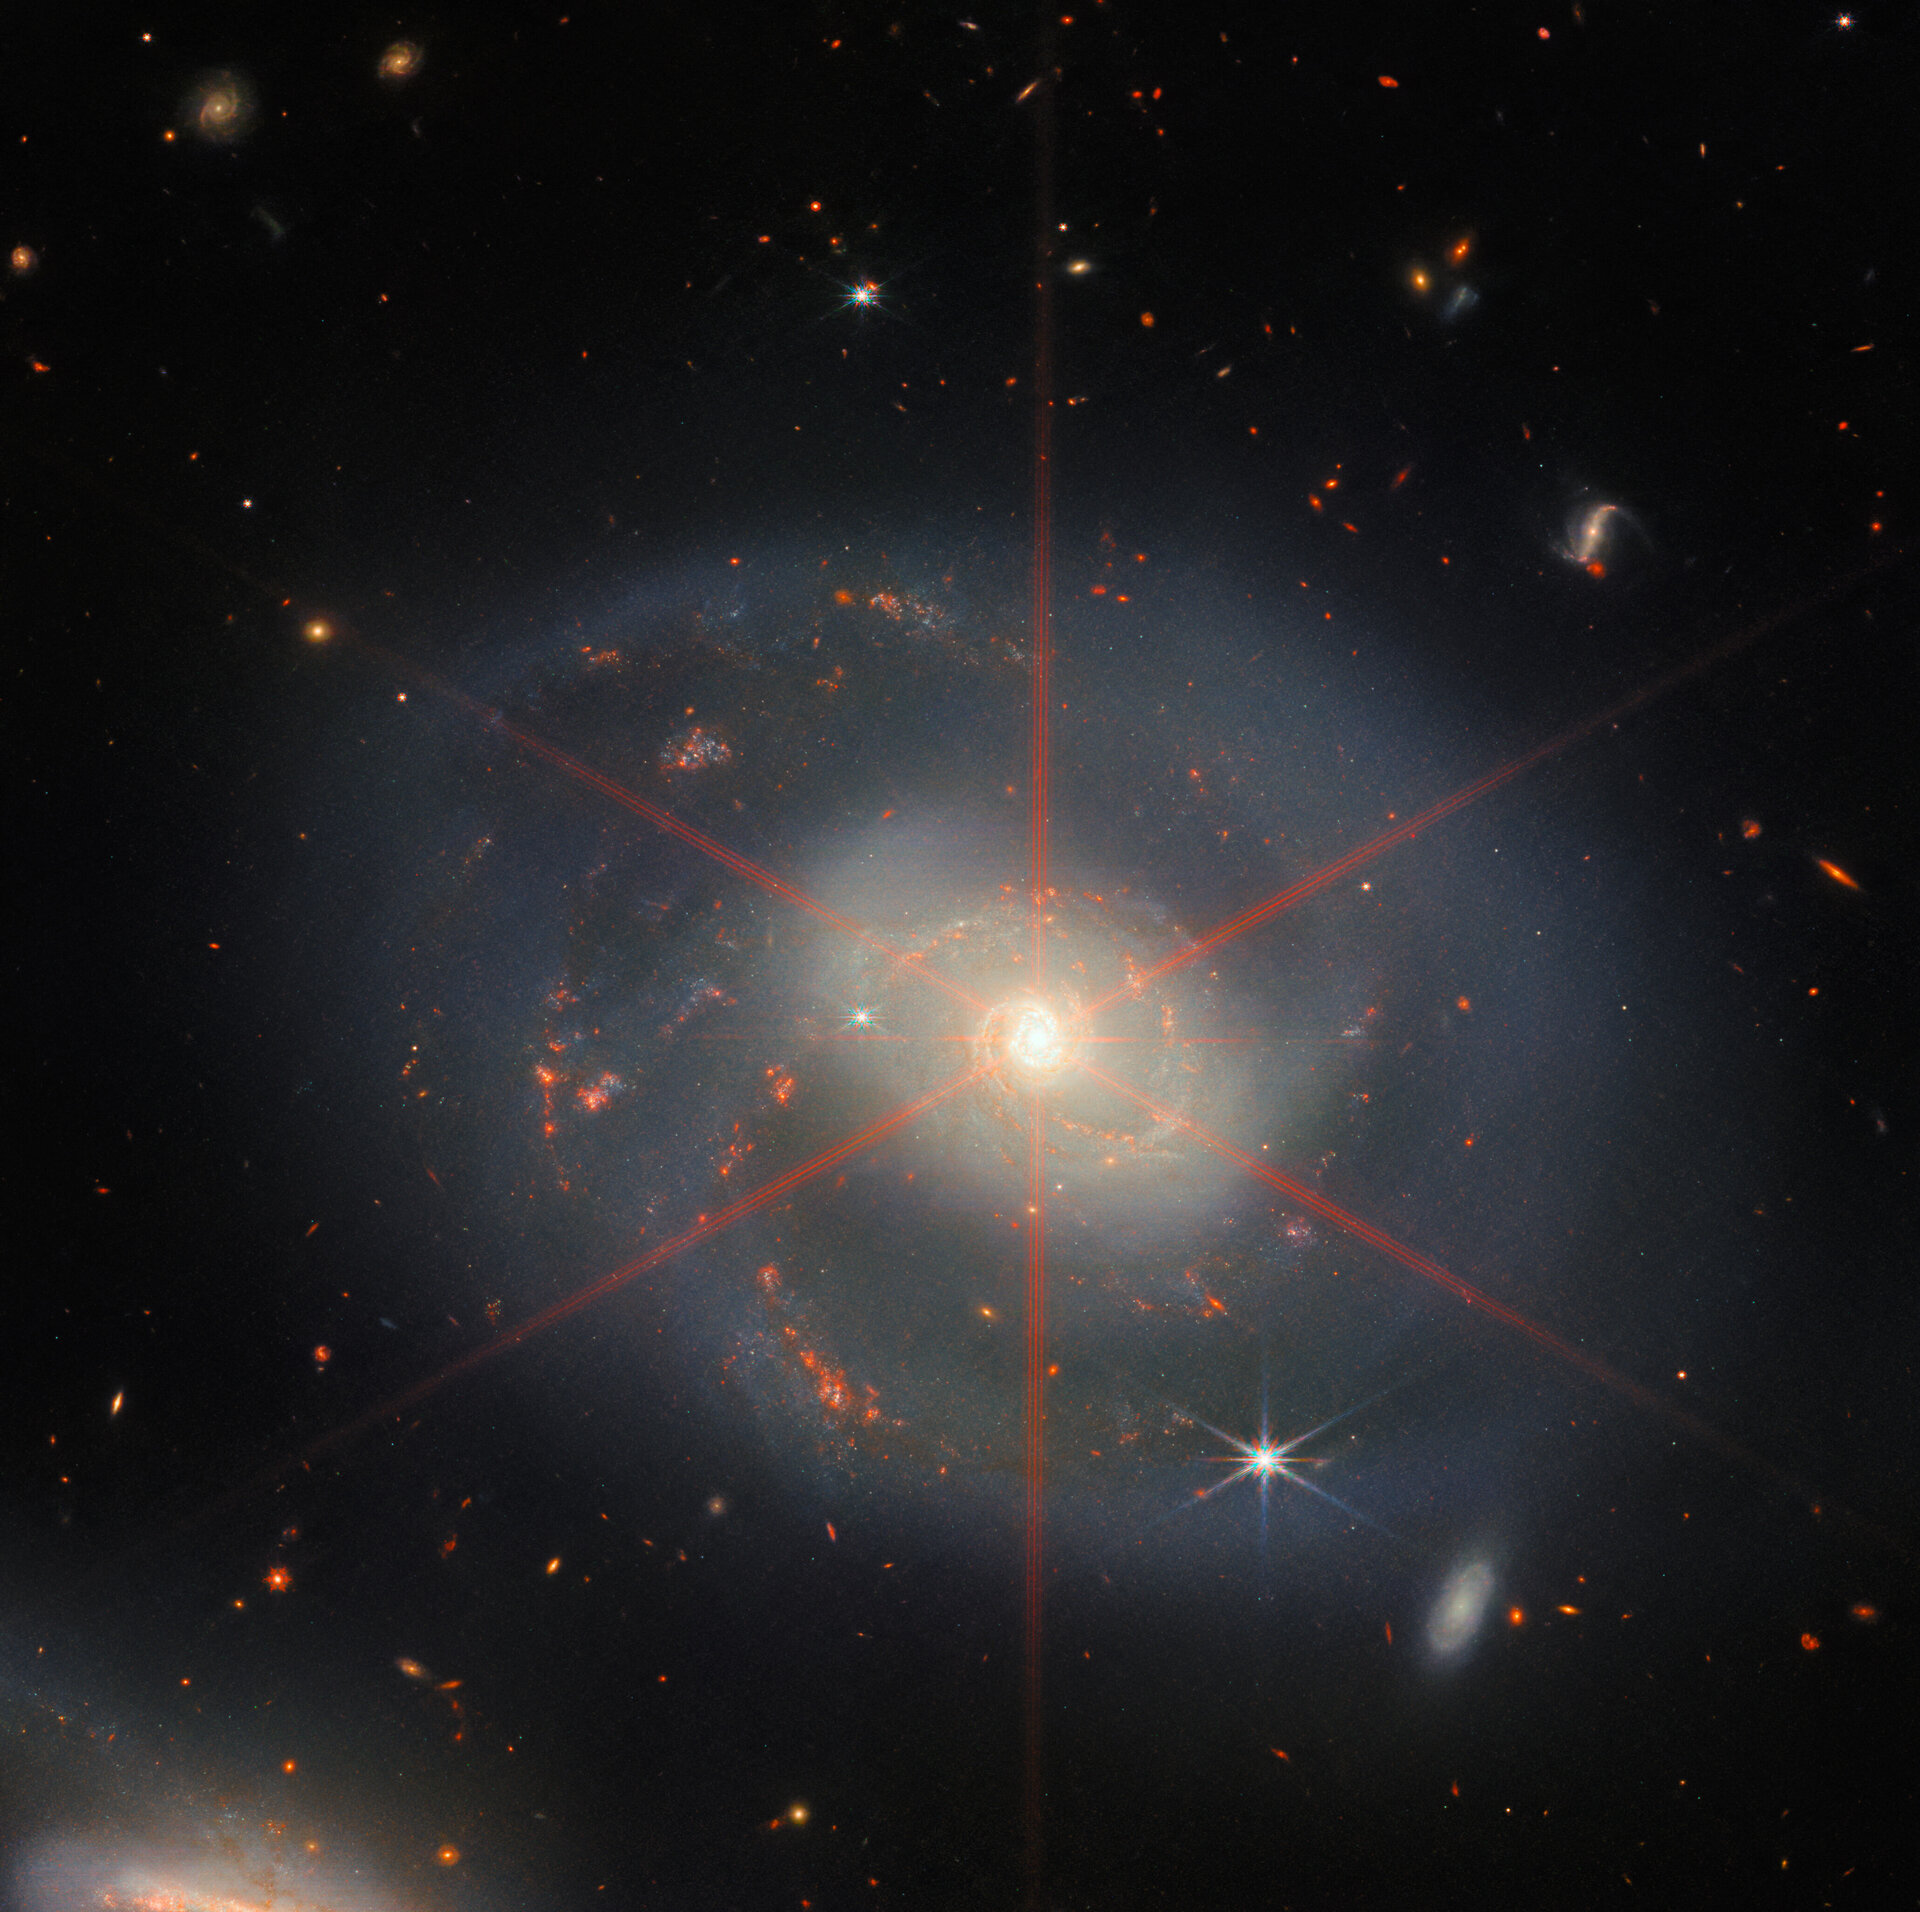 Webb legt het heldere, face-on spiraalstelsel NGC 7469 vast